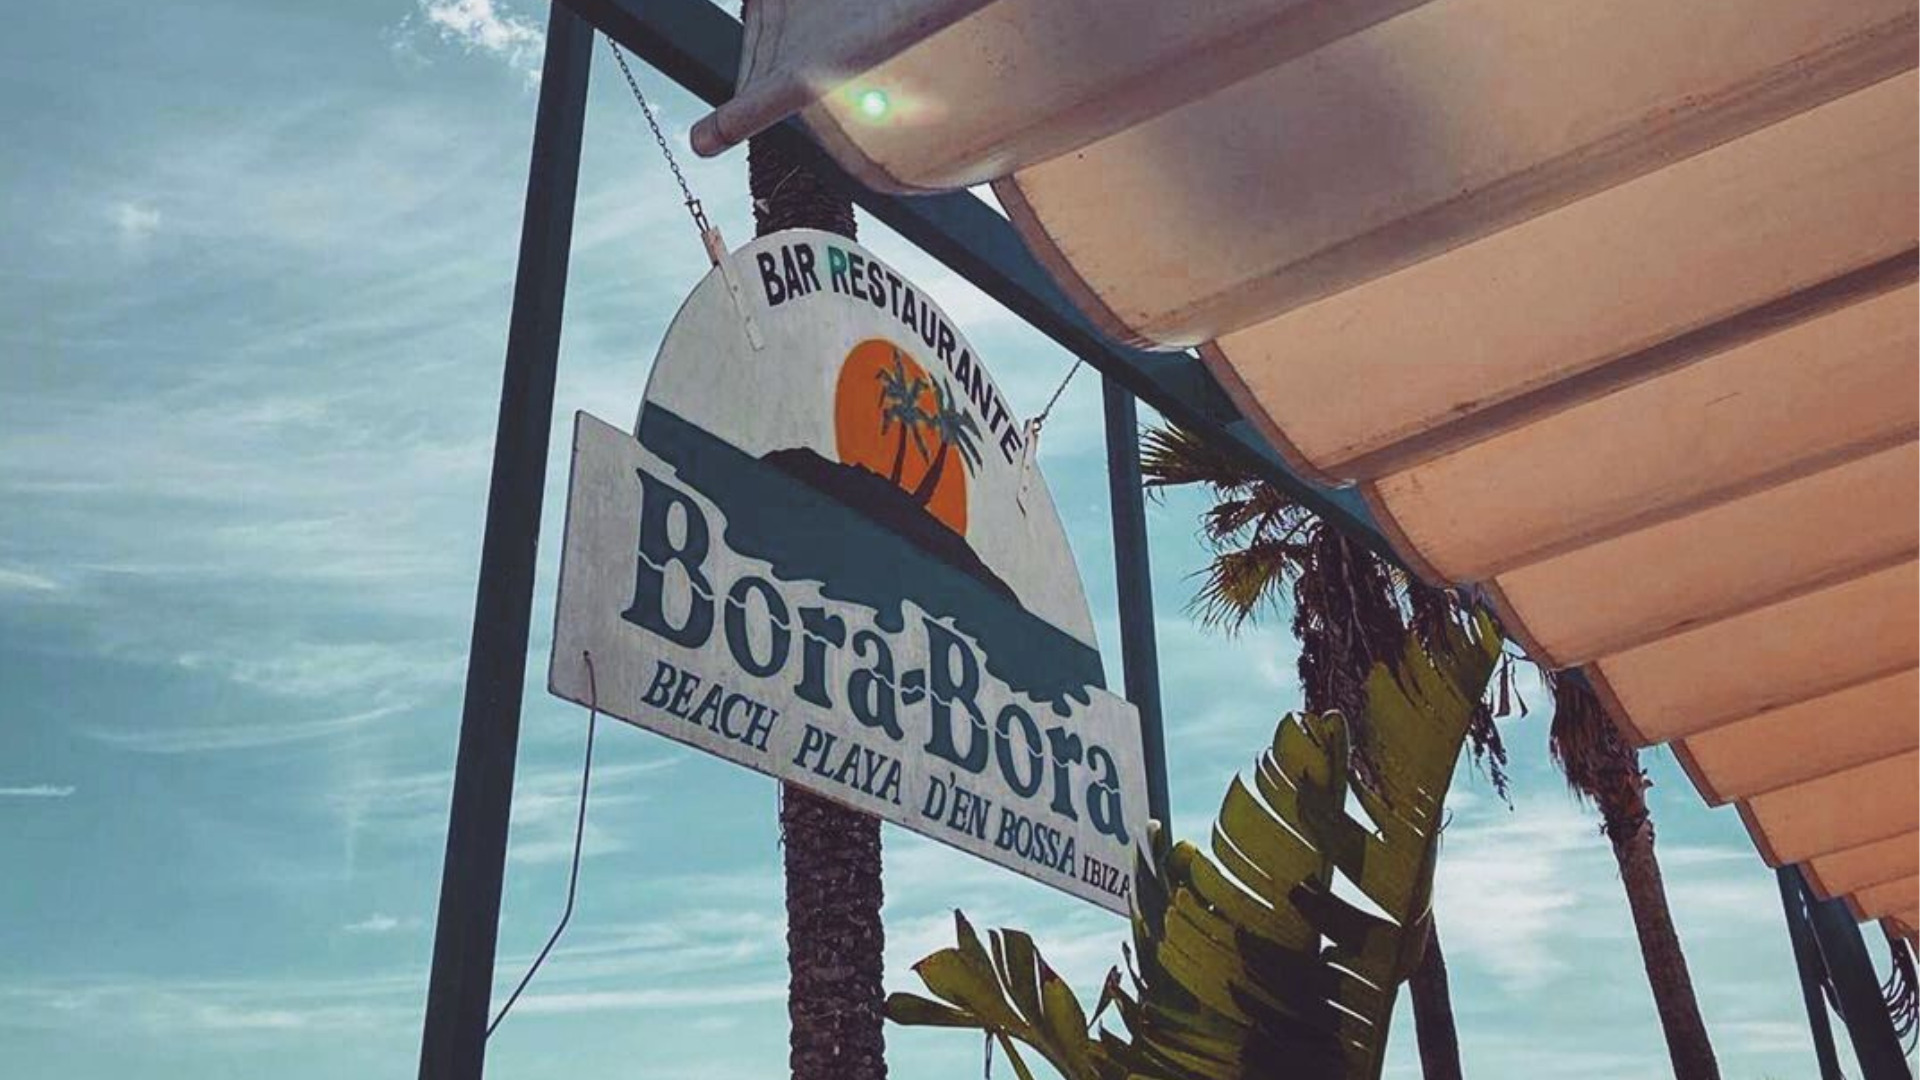 Bora Bora Beach Club Ibiza